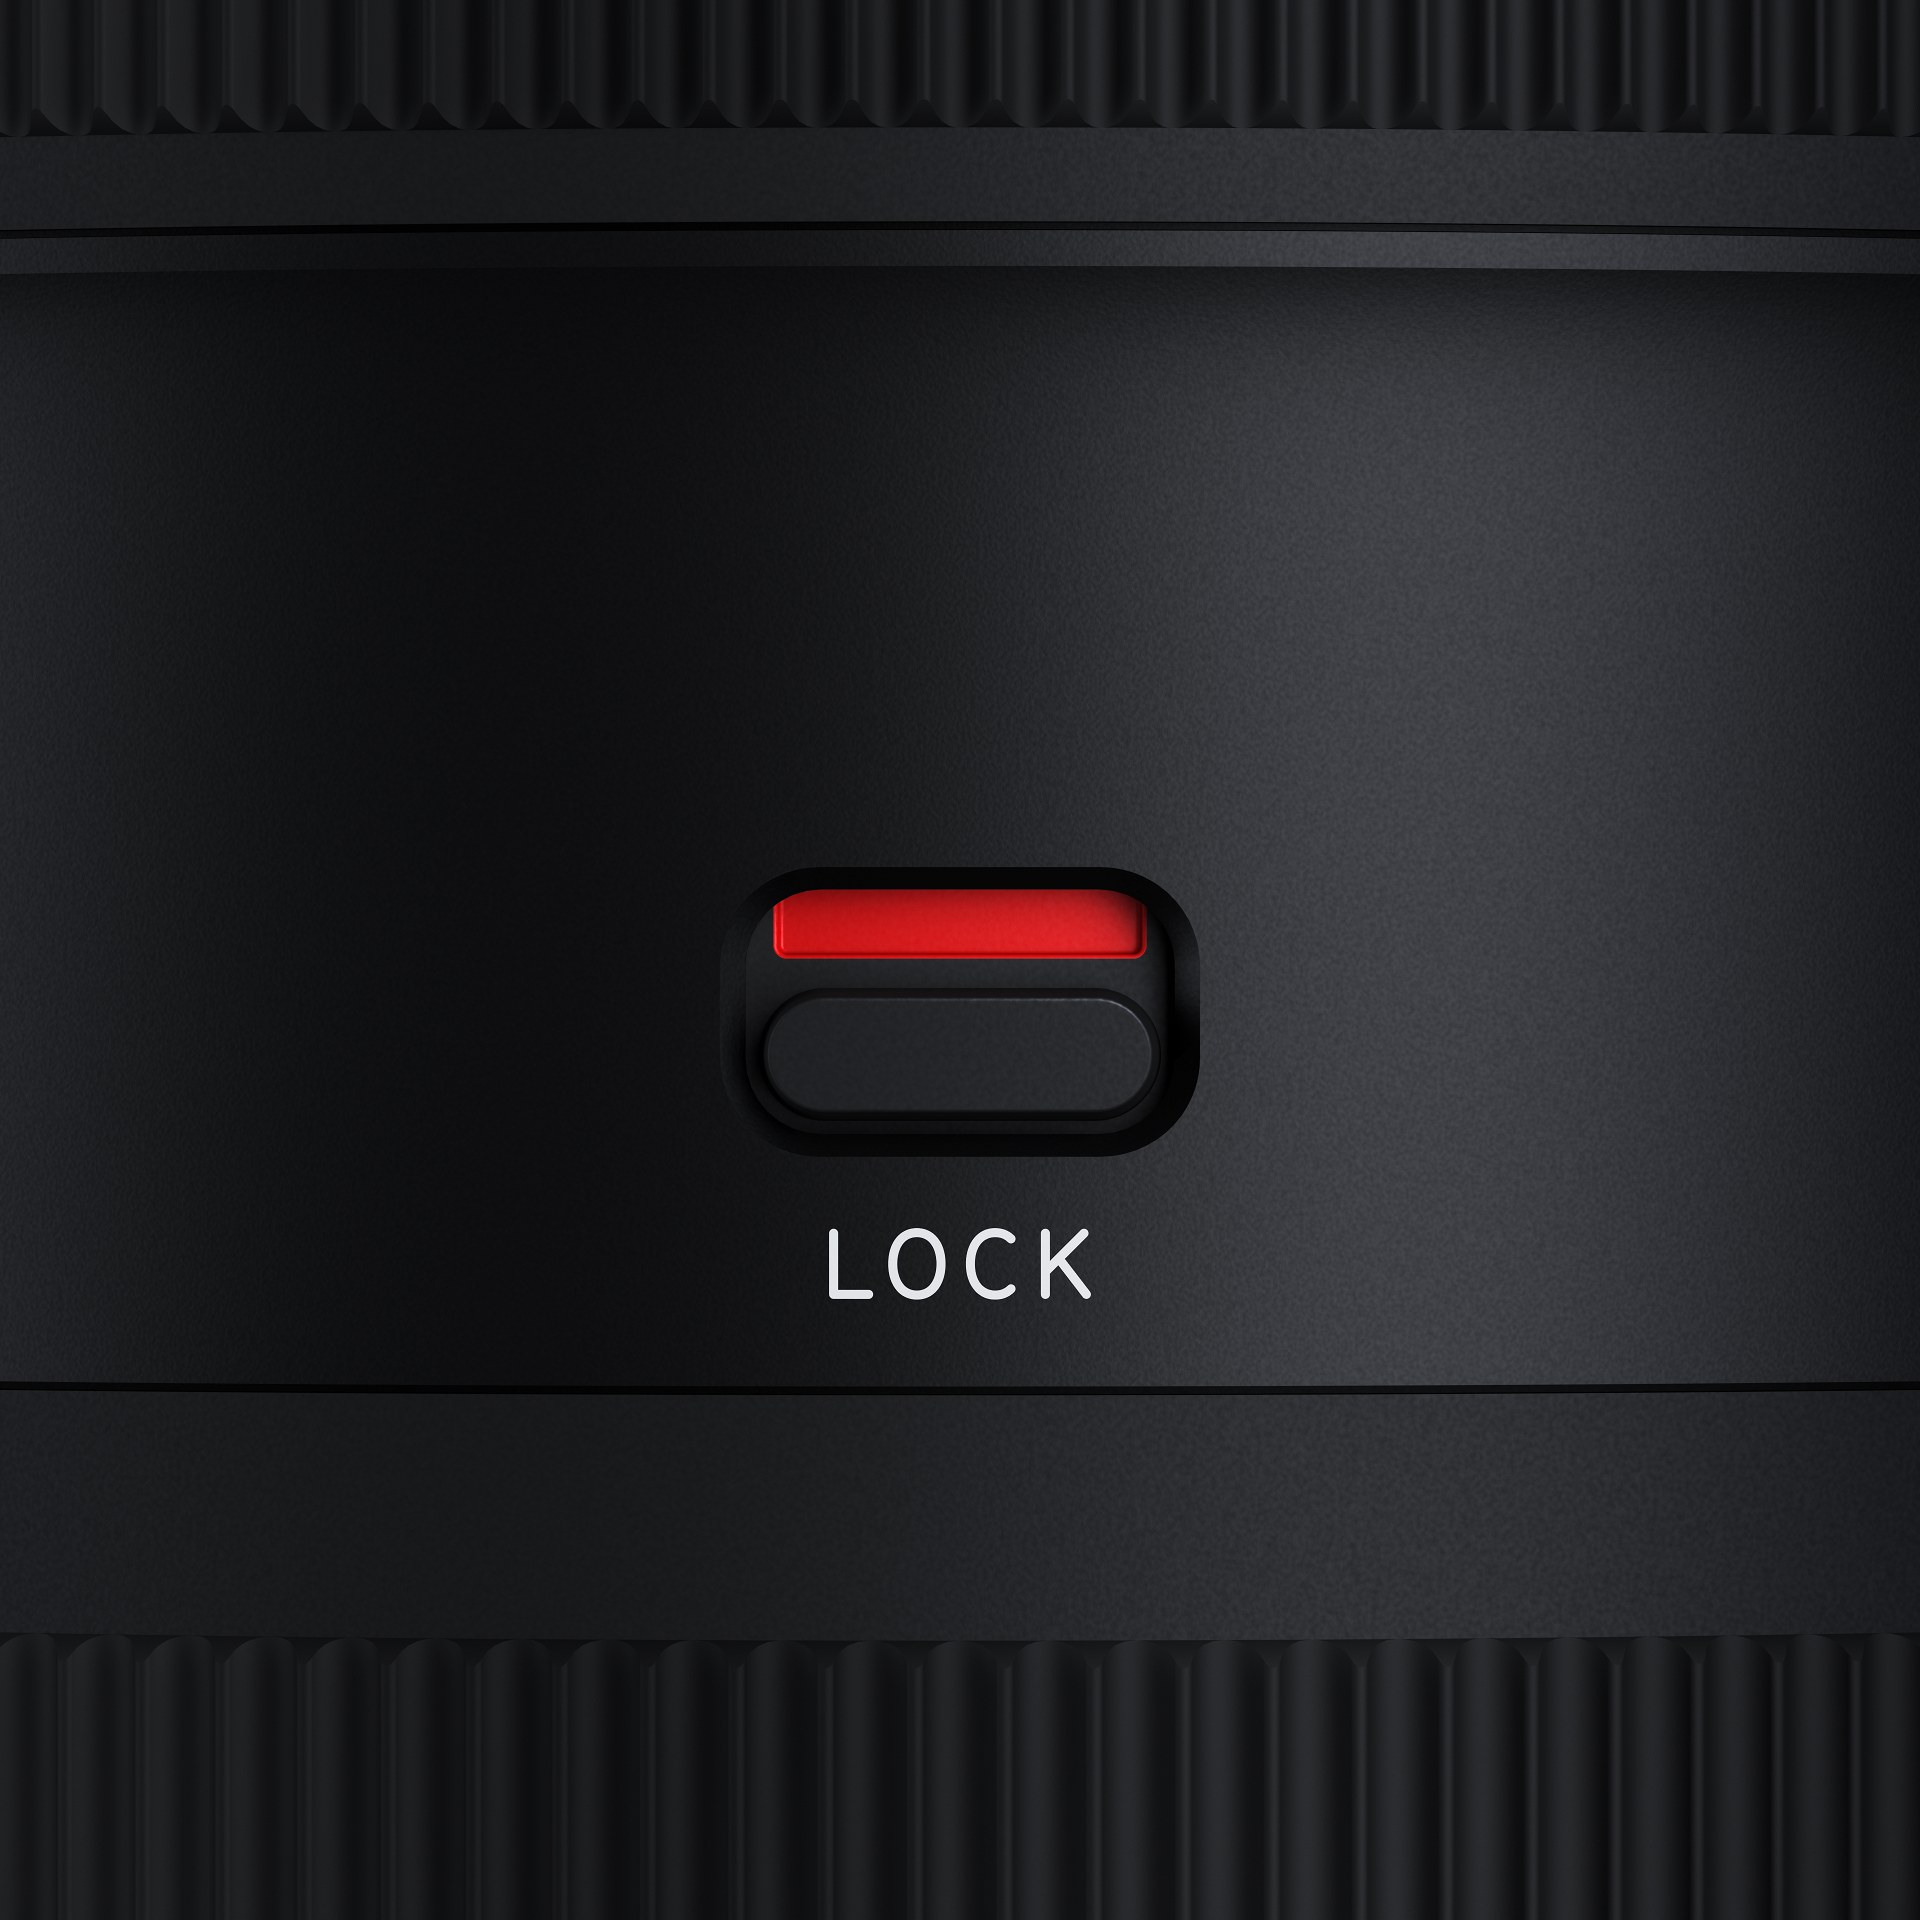 a058-lock-switch-20210819.jpg